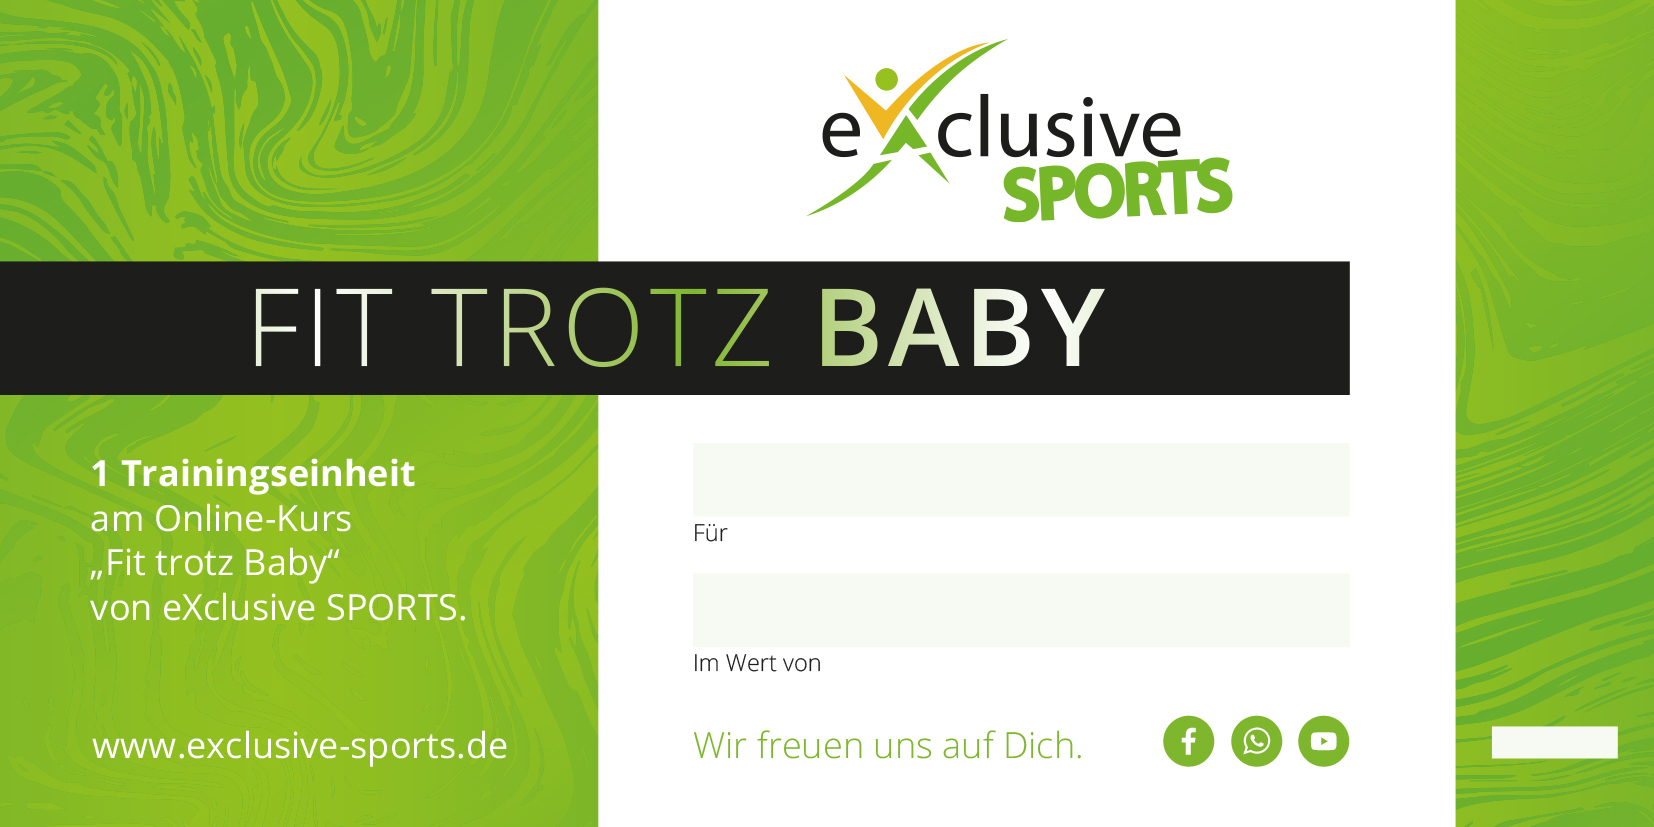 (c) Exclusive-sports.de